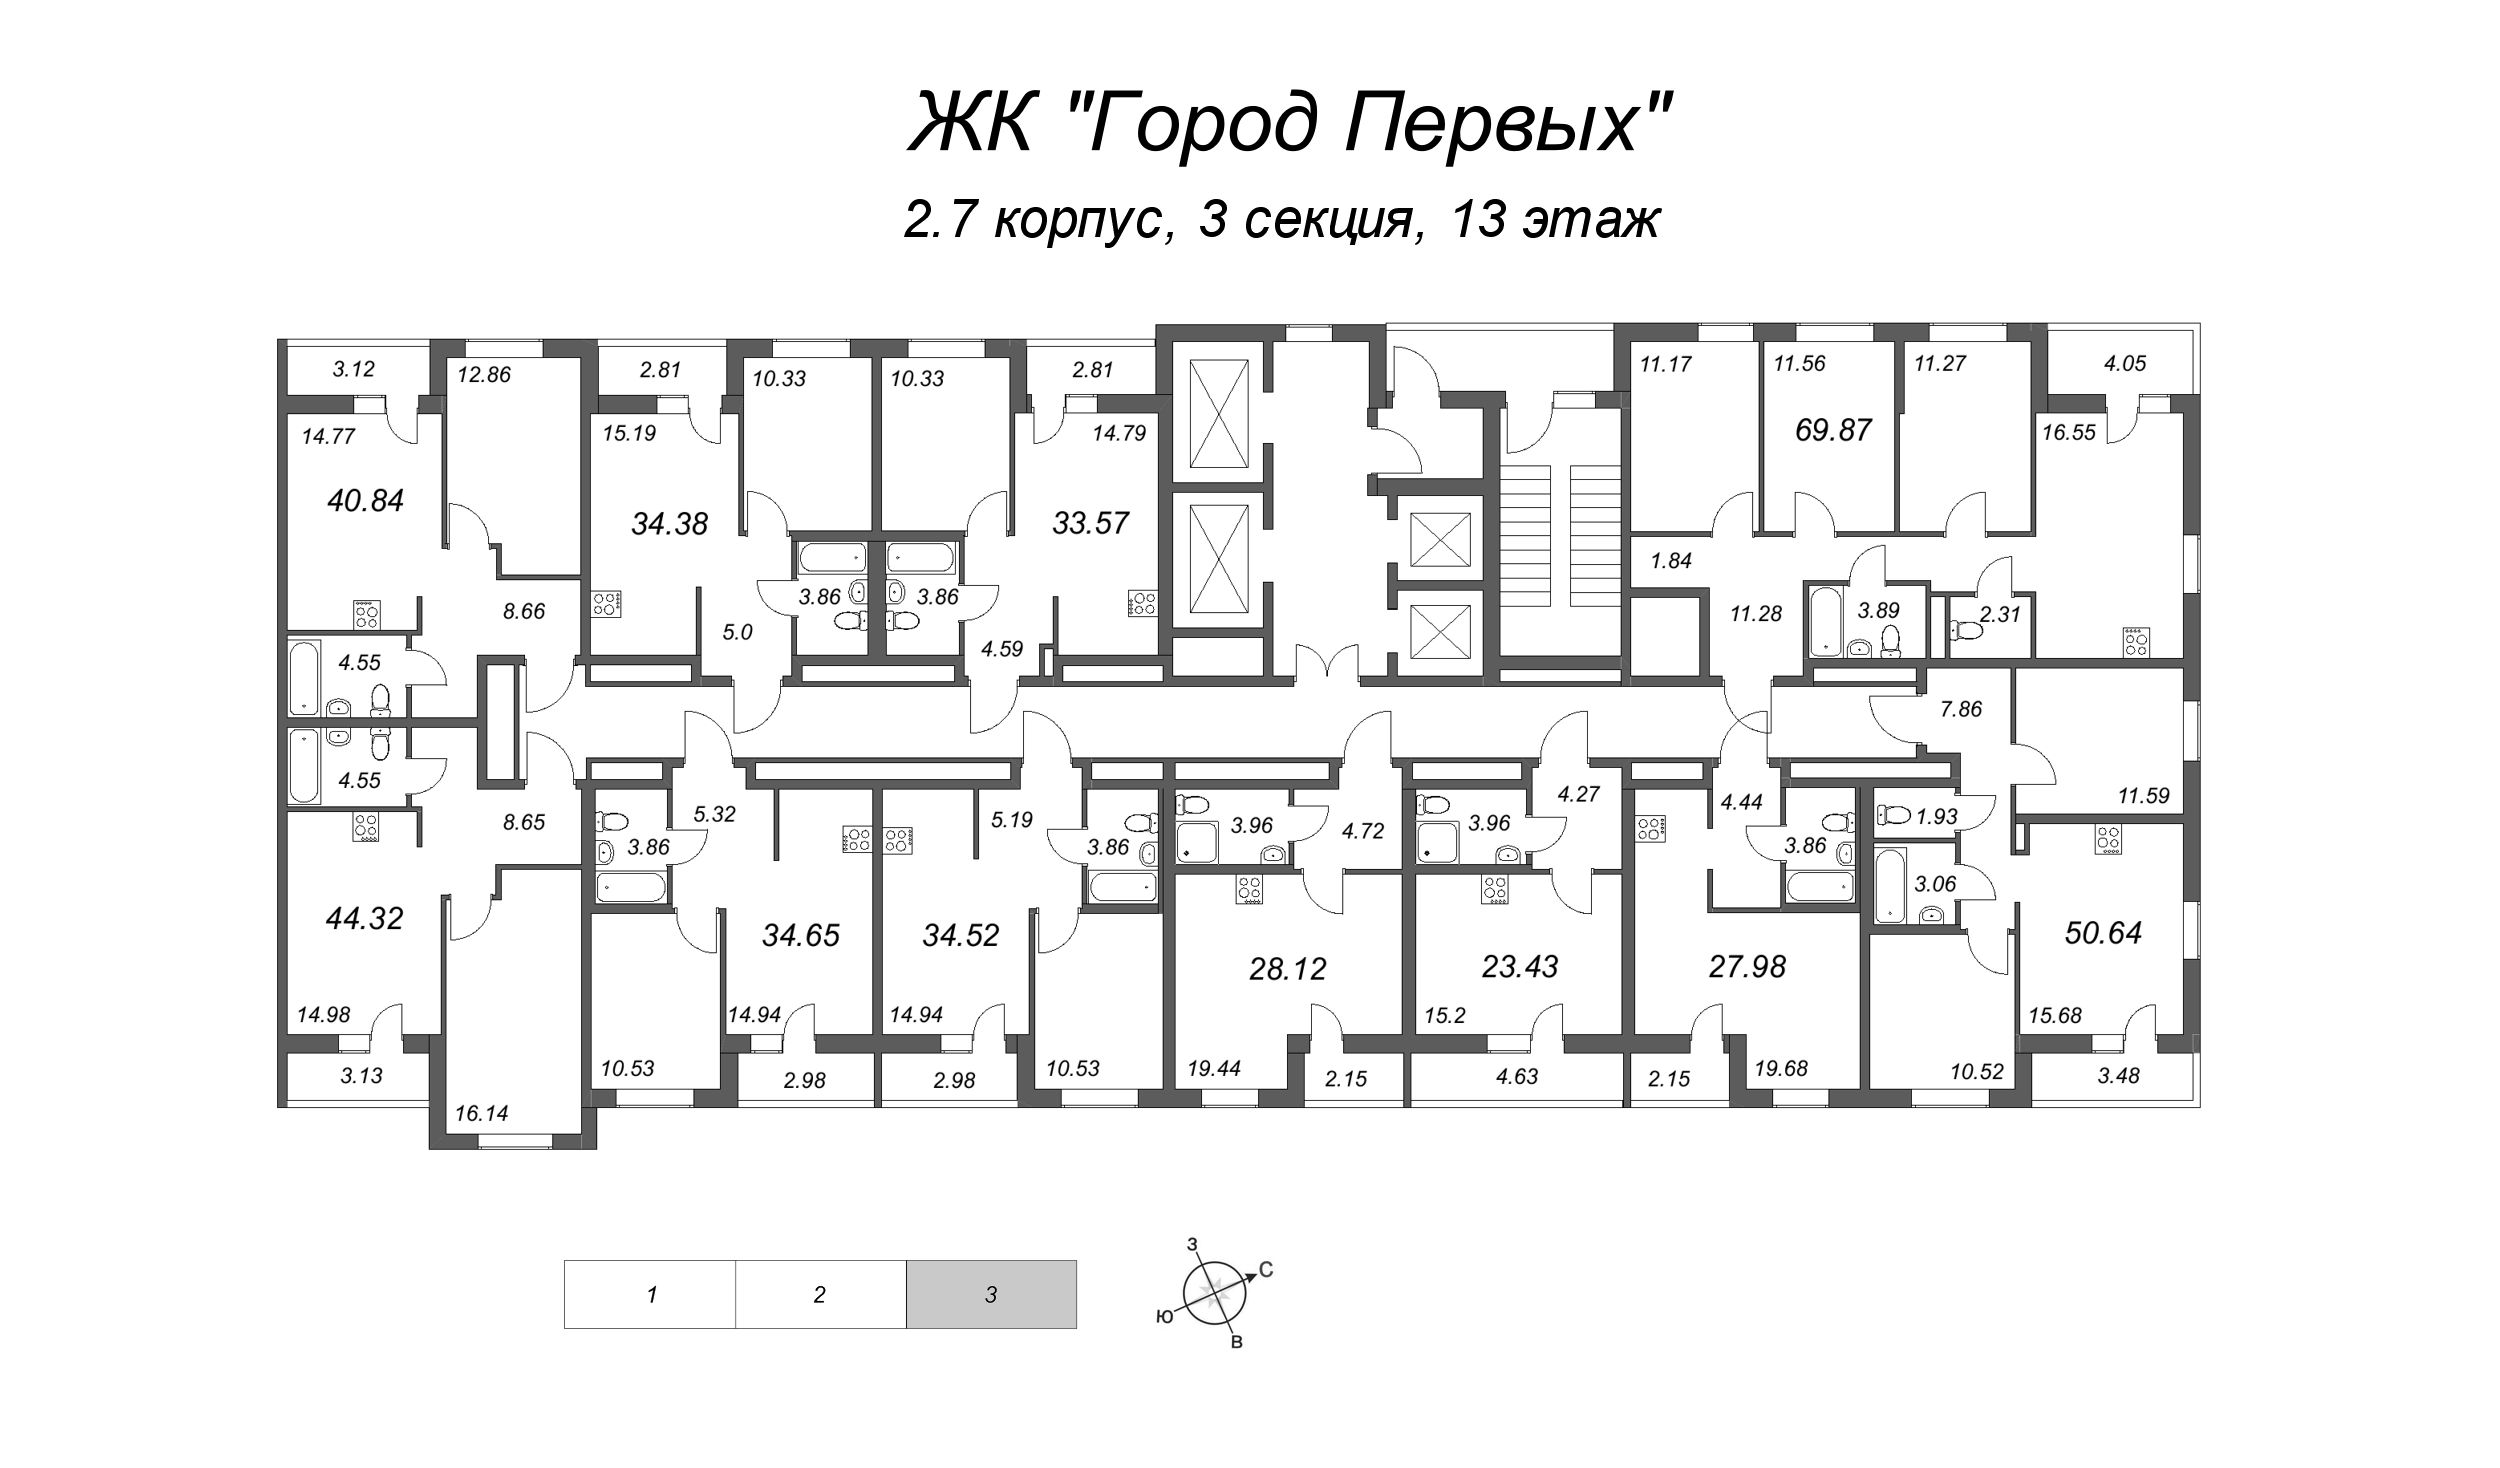 4-комнатная (Евро) квартира, 64.95 м² - планировка этажа